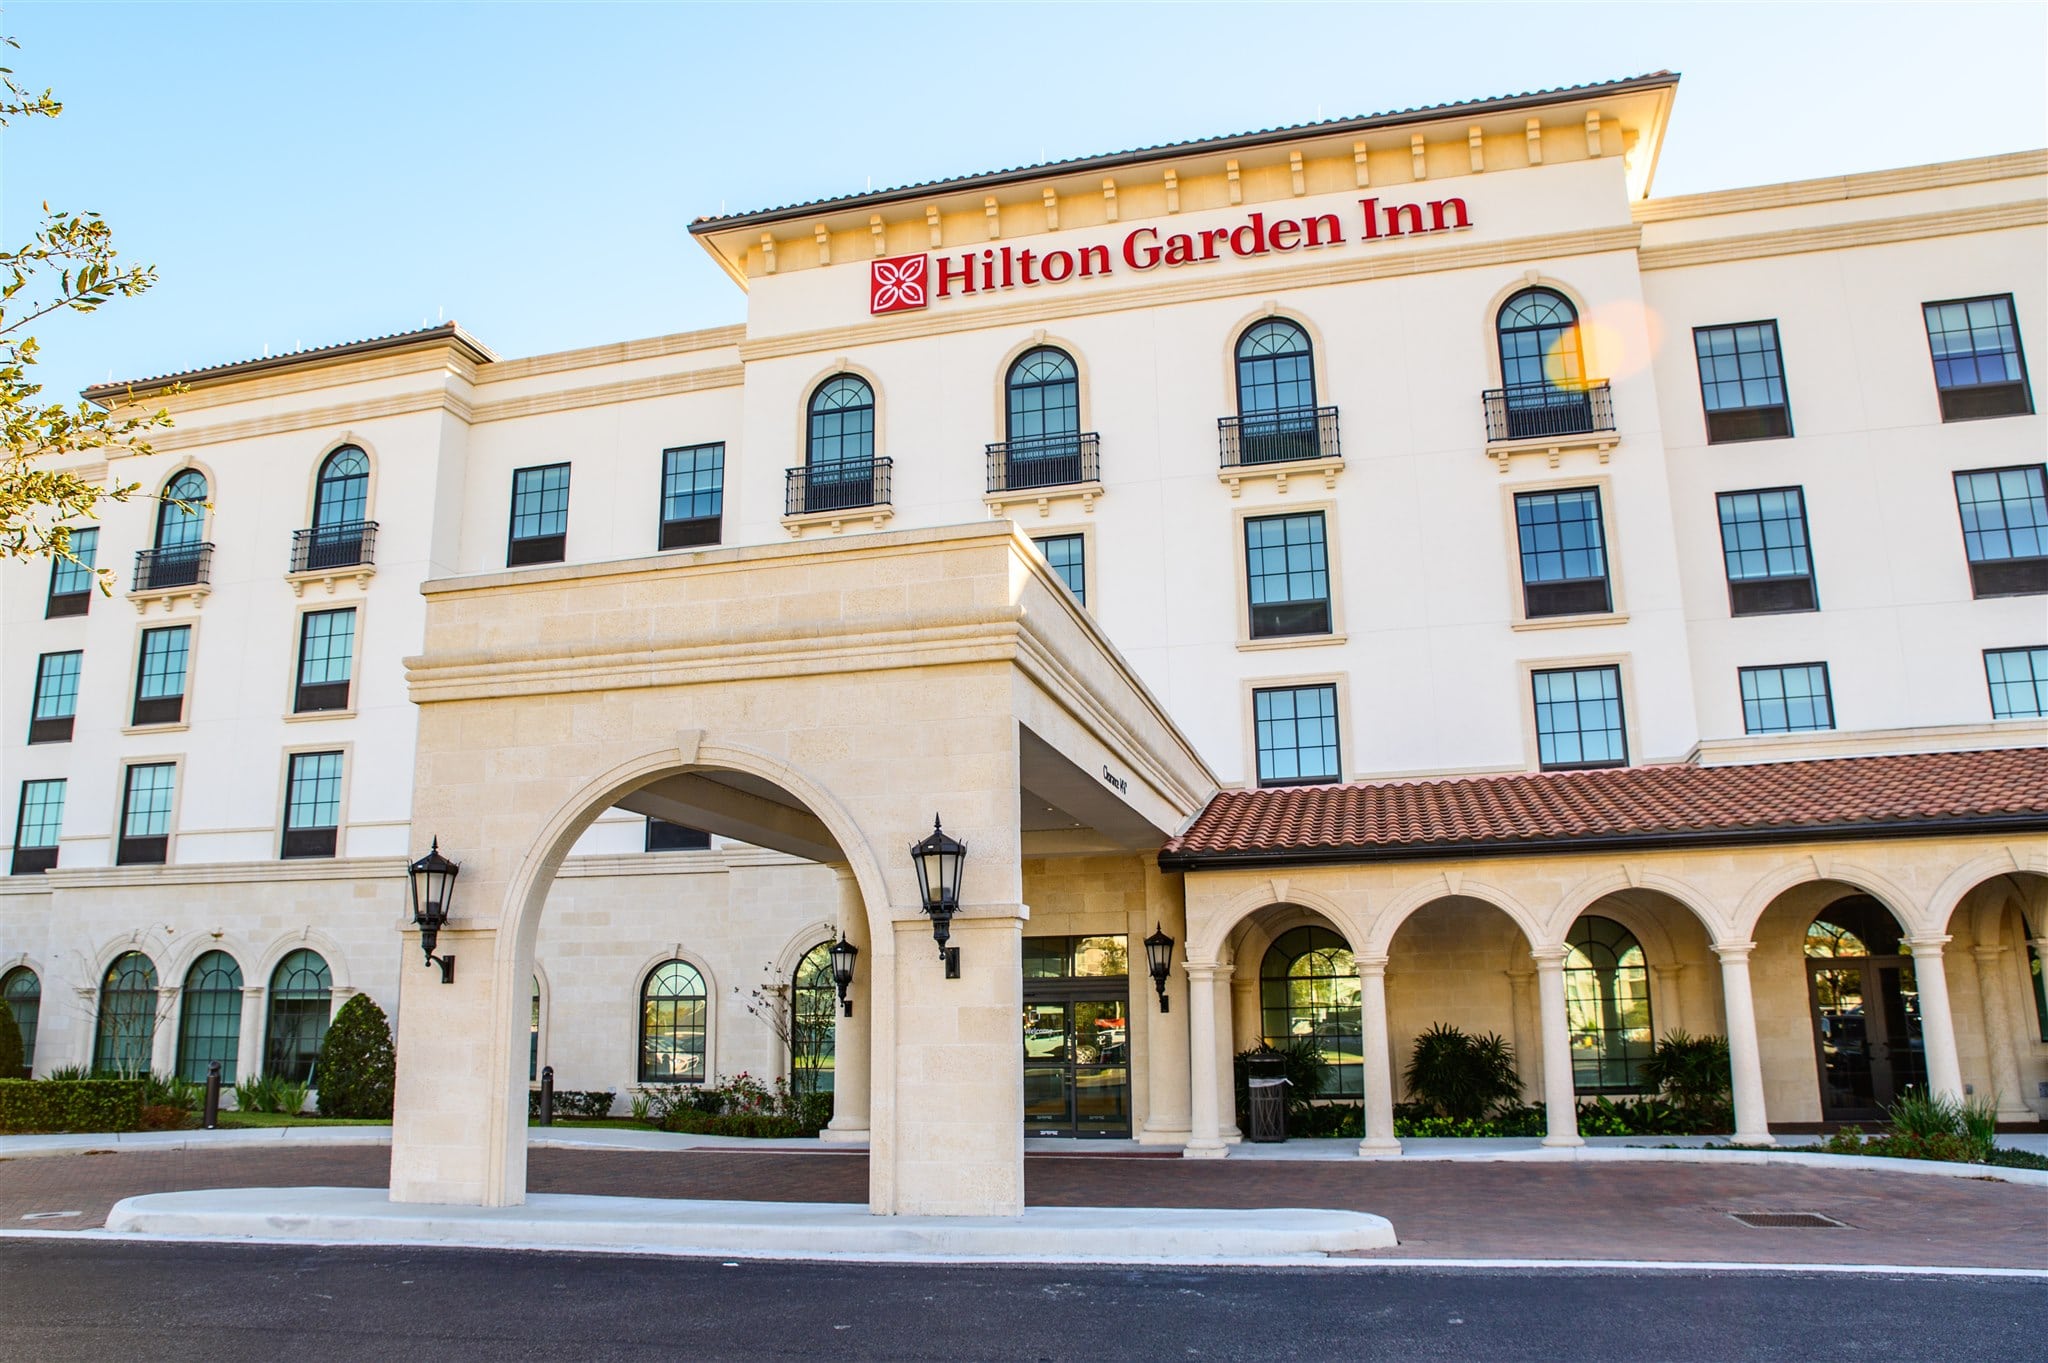 HIlton Garden Inn Winter Park, FL entrance location of Wedding Venue Map Sip, See and Celebrate Spring event